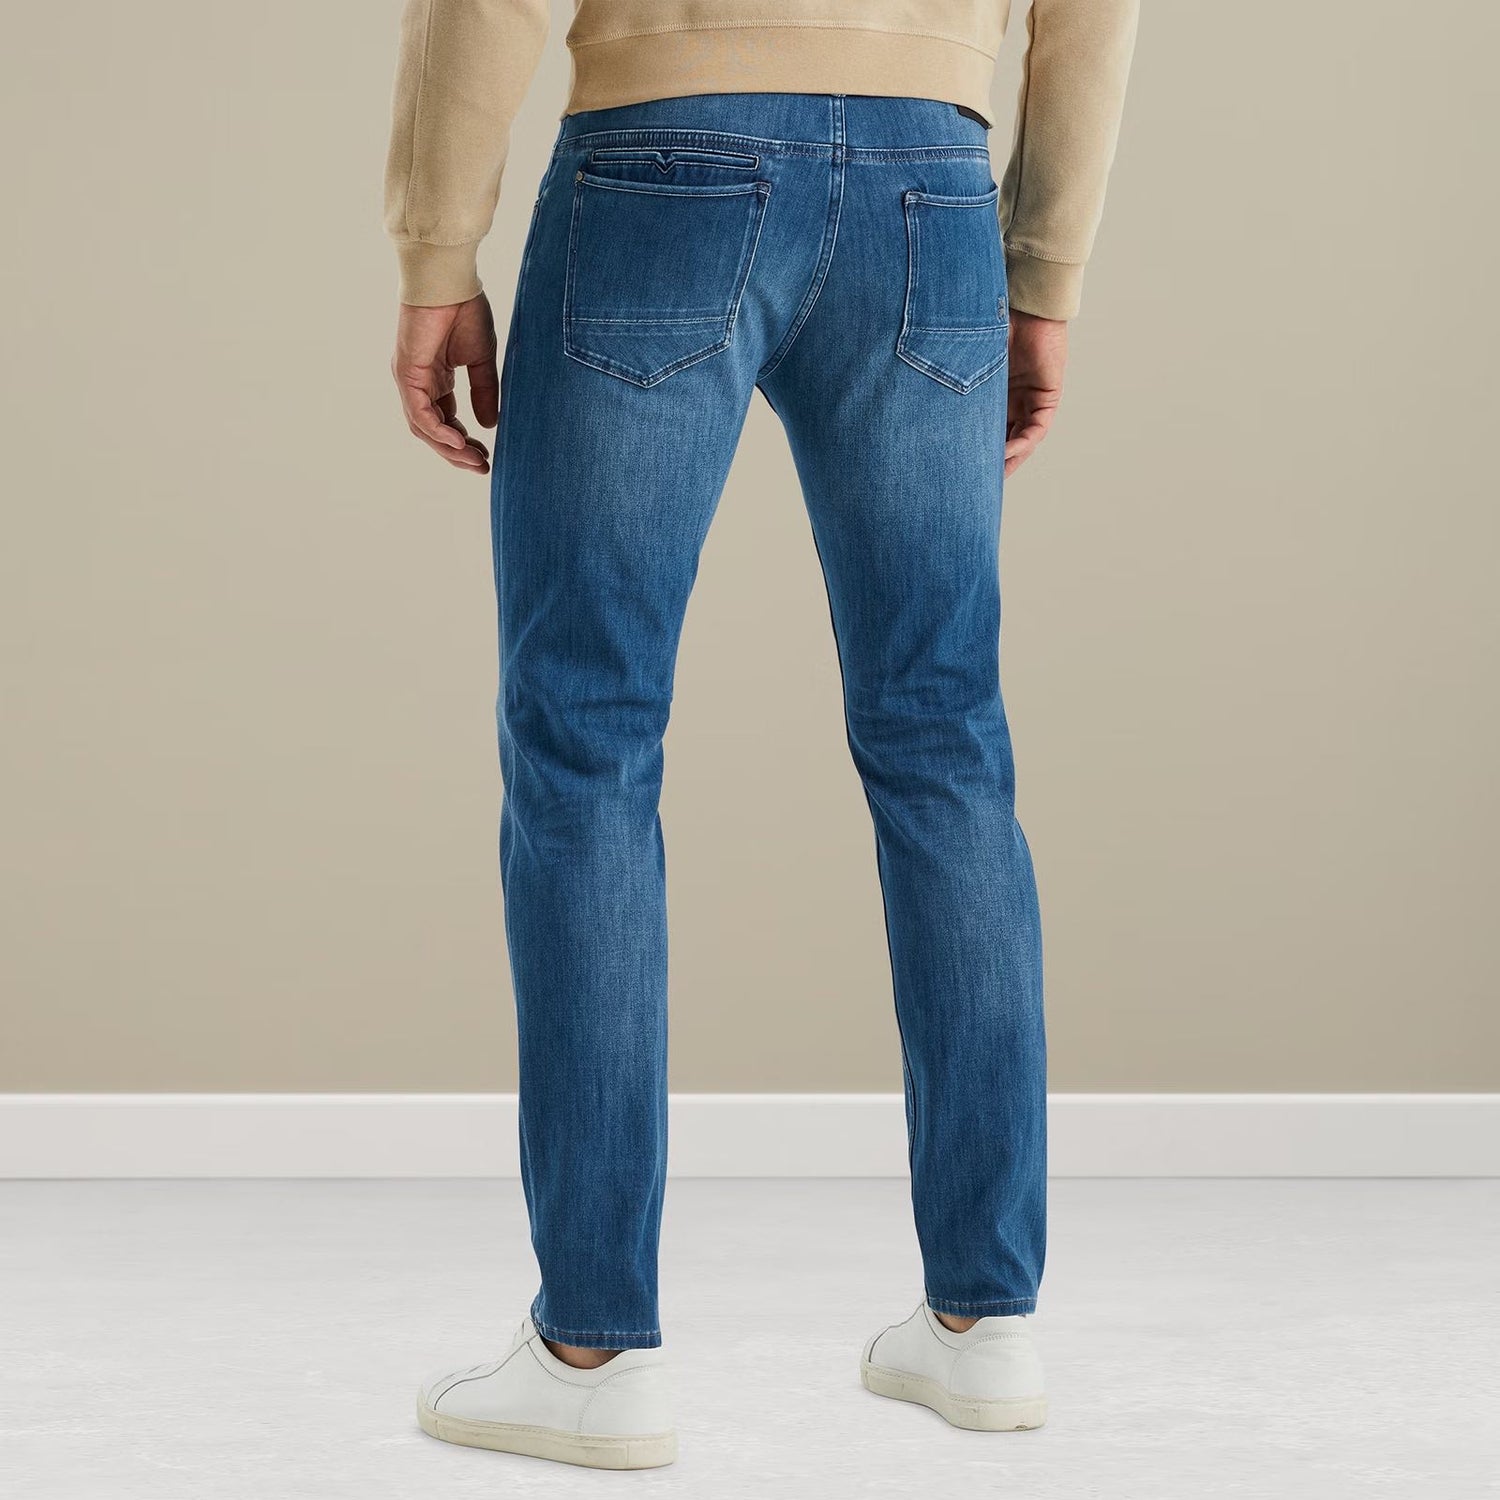 Jeans V850 Slim Fit UFW (Used Fresh Wash)